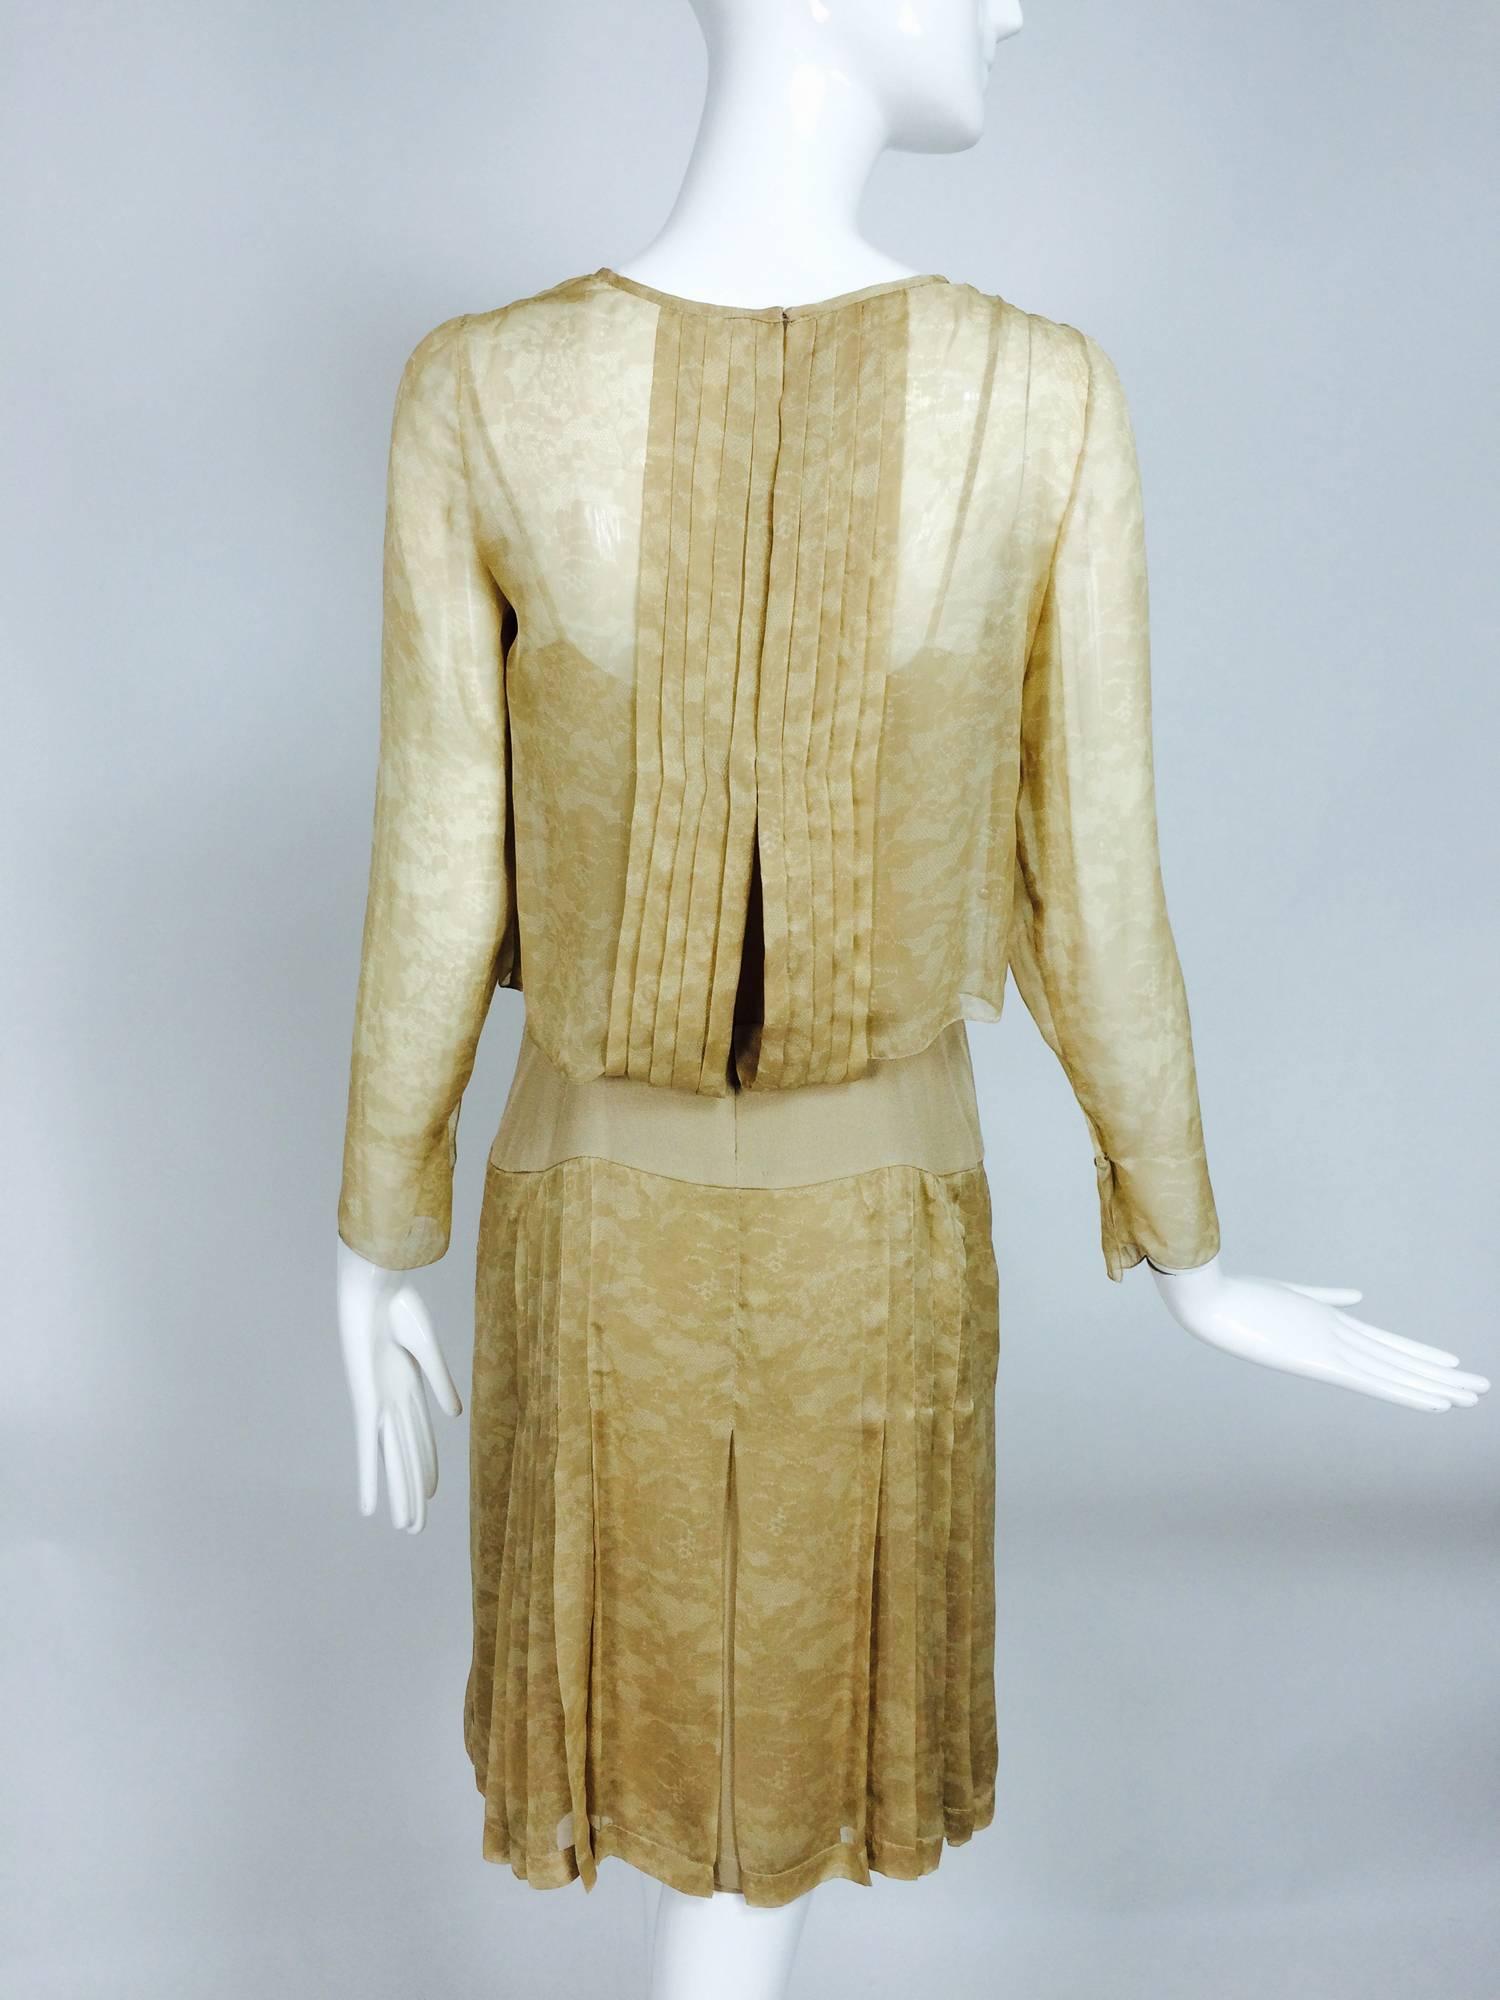 Beige Chanel long sleeve lace print champagne silk chiffon chemise dress 2001